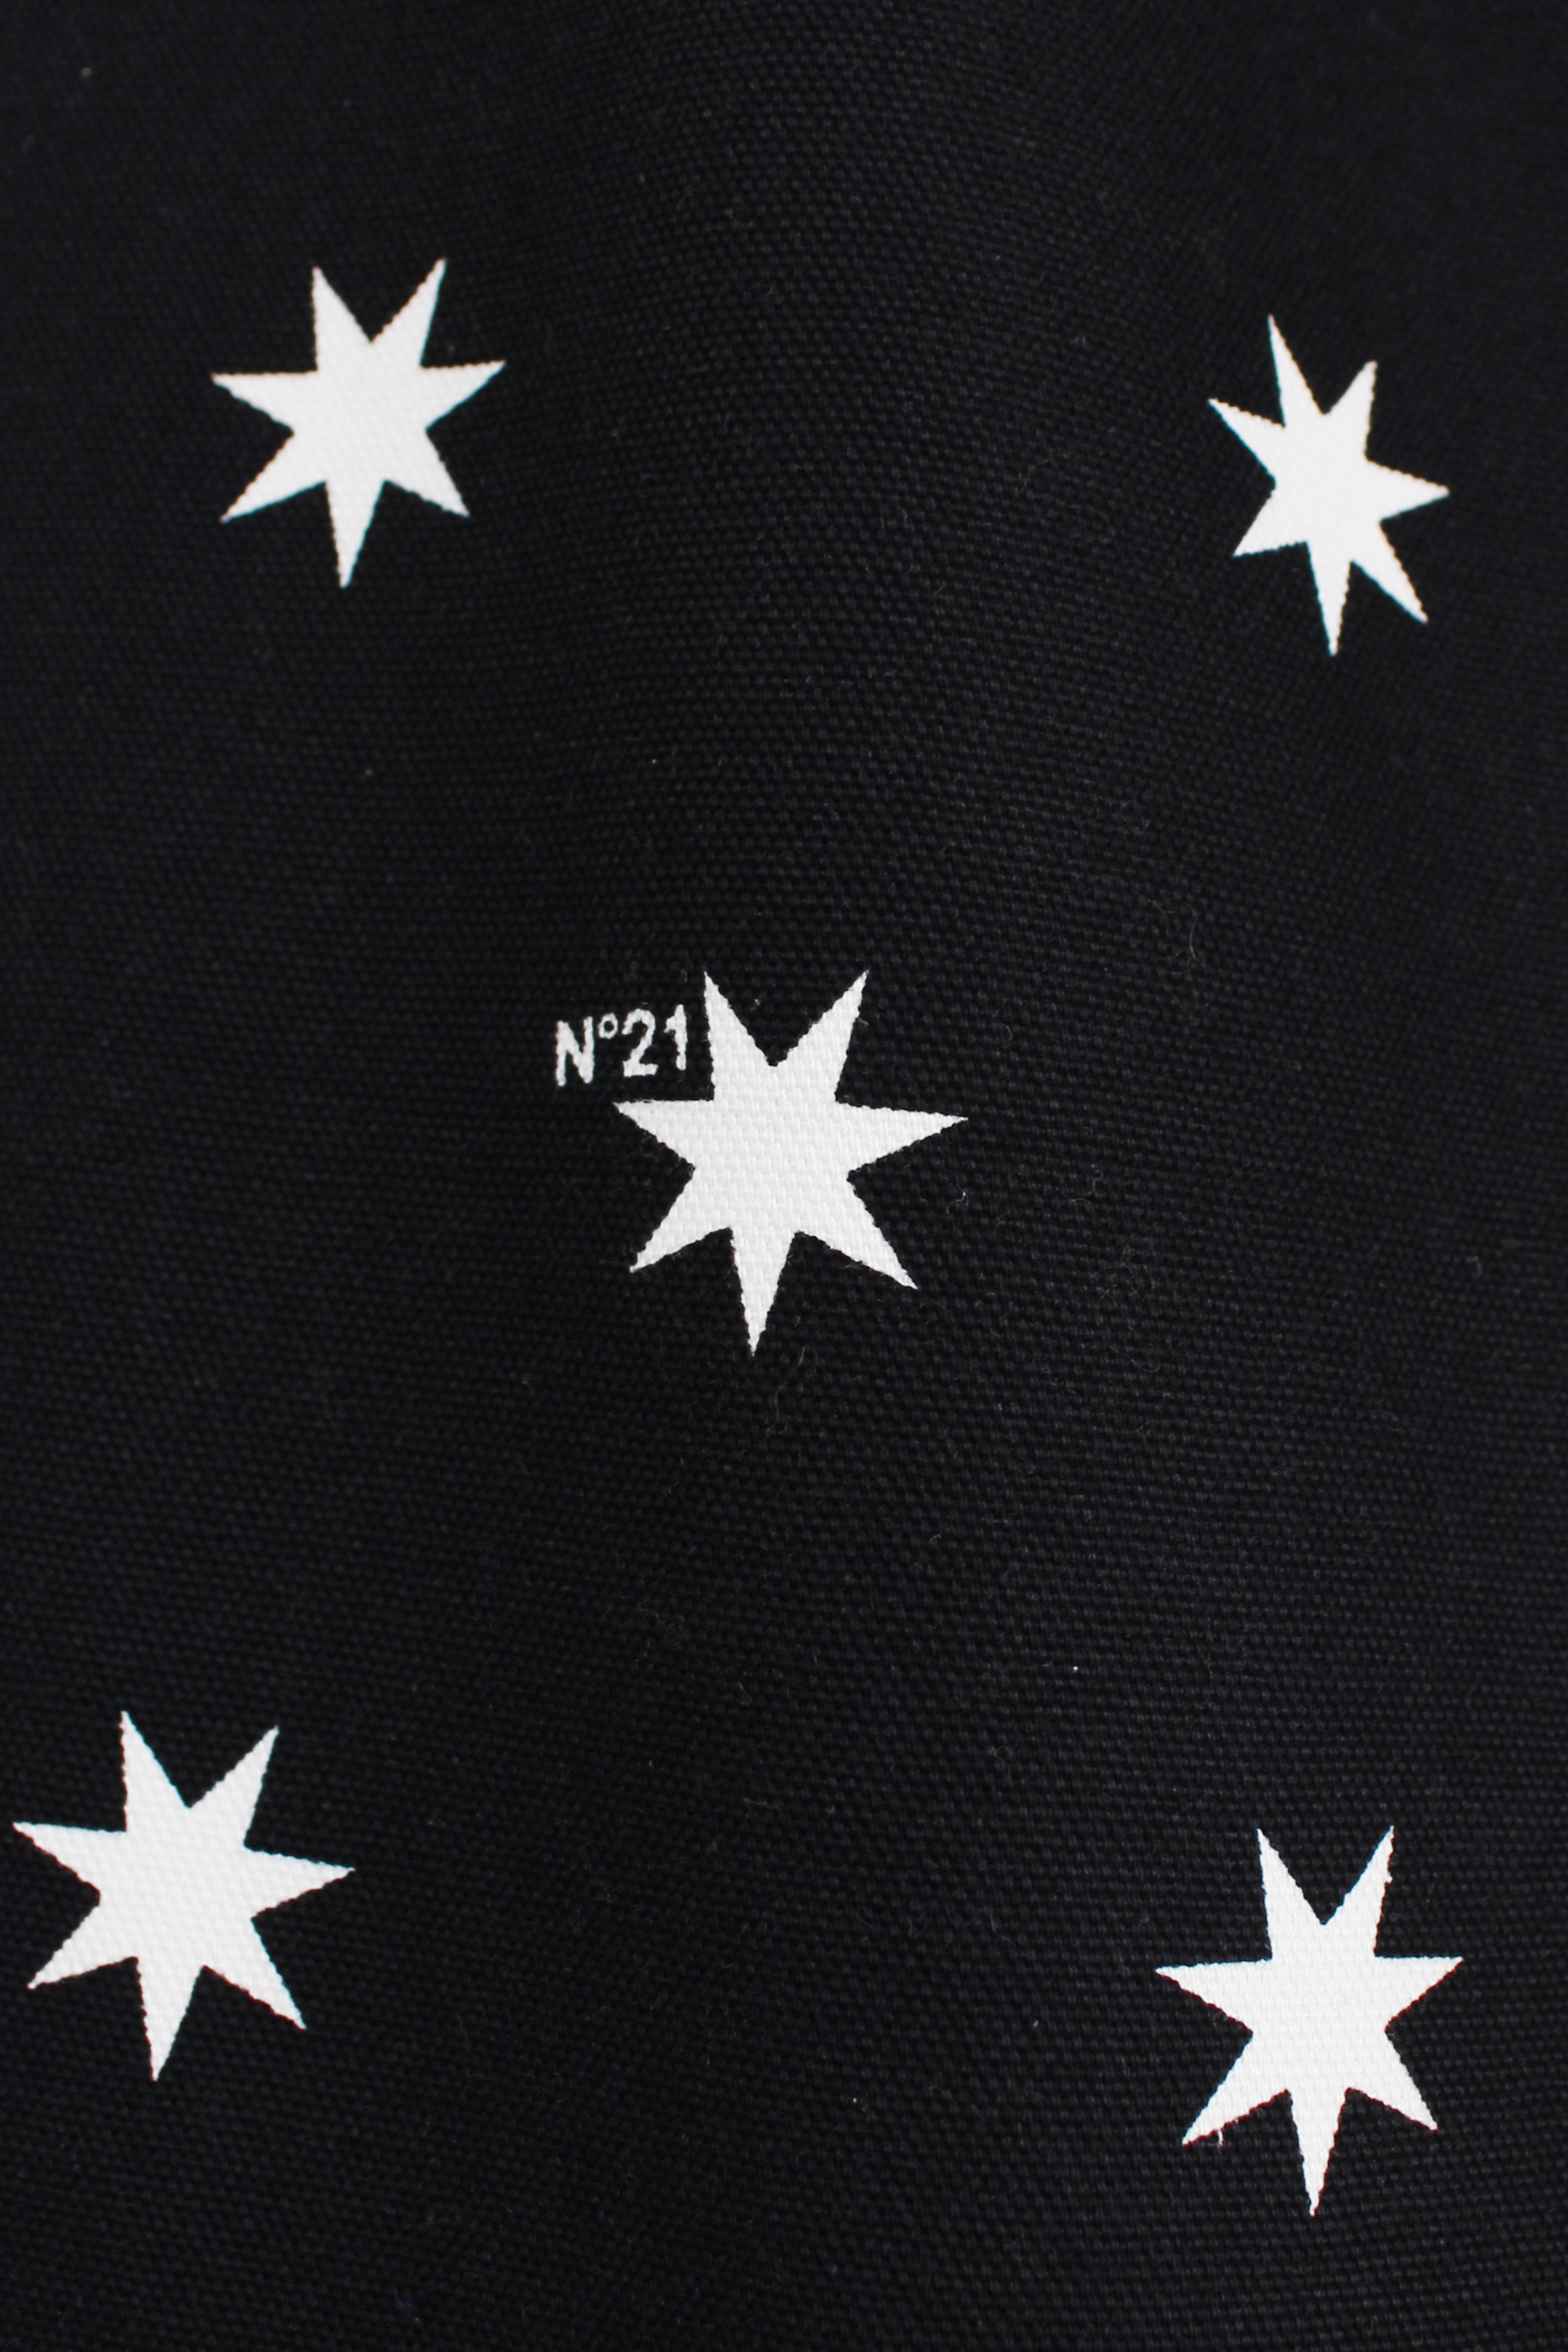 N°21 star print pencil skirt